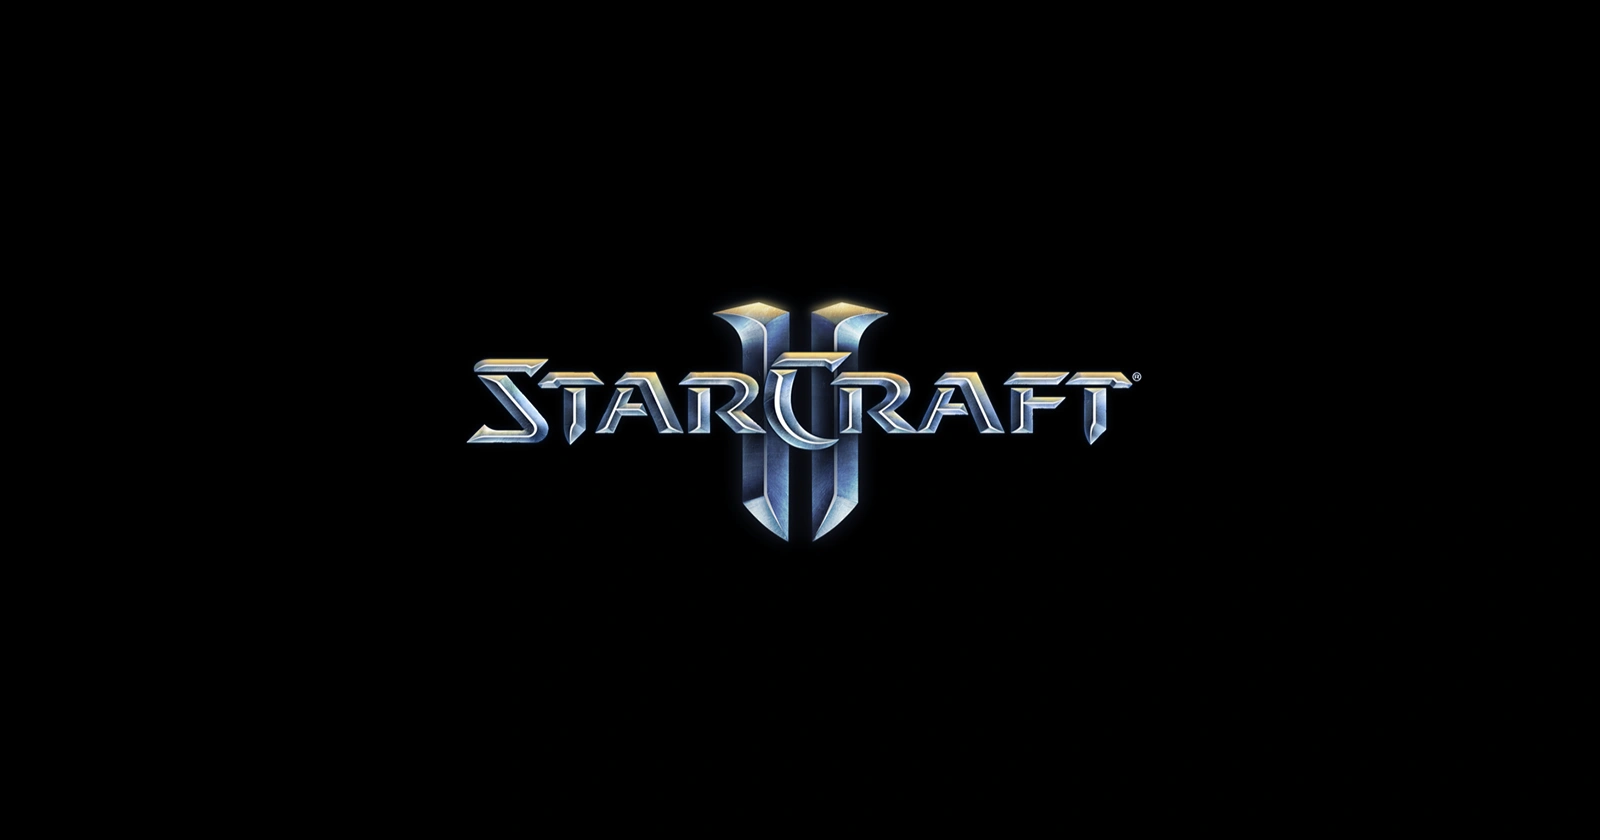 StarCraft 2 (SC2) 'custom or arcade game mode crashing' issue acknowledged